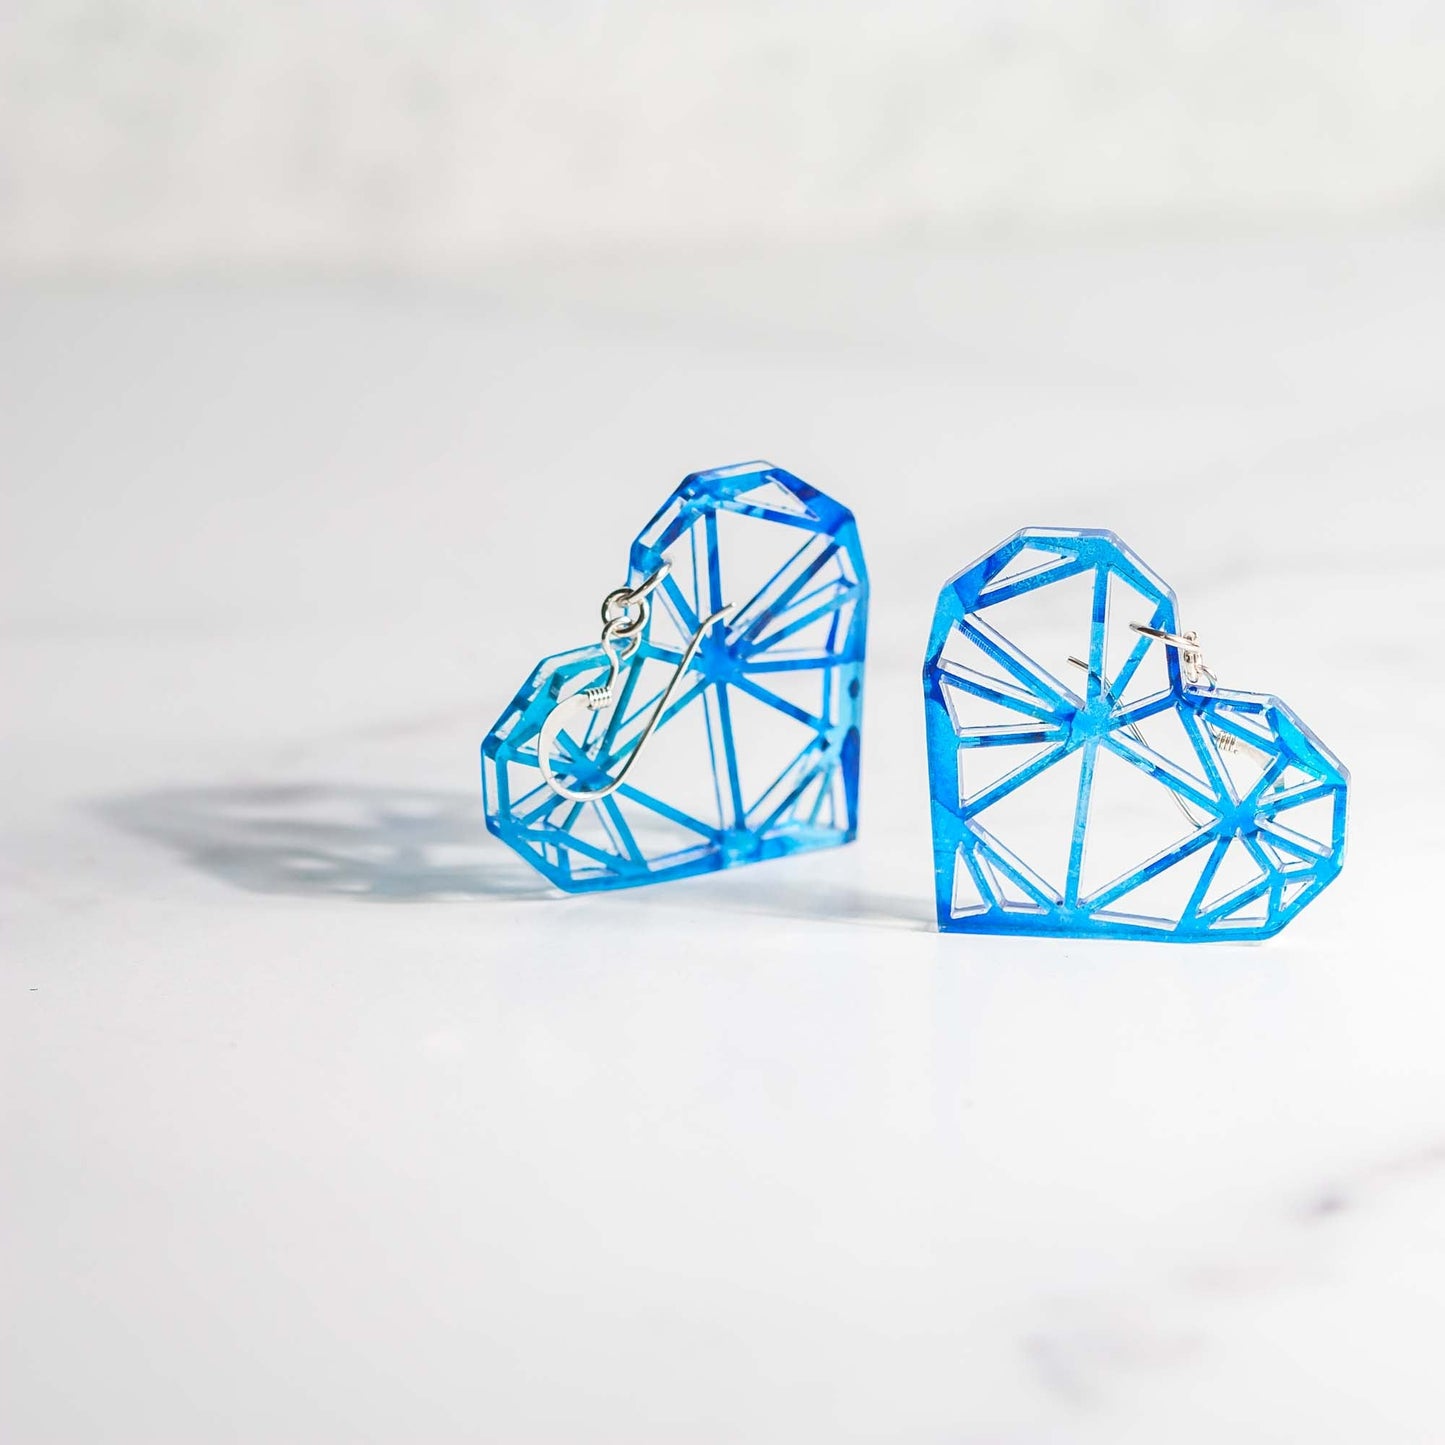 Acrylic Earrings - Blue Alcohol Ink Geometric Heart - by LeeMo Designs in Bend, Oregon